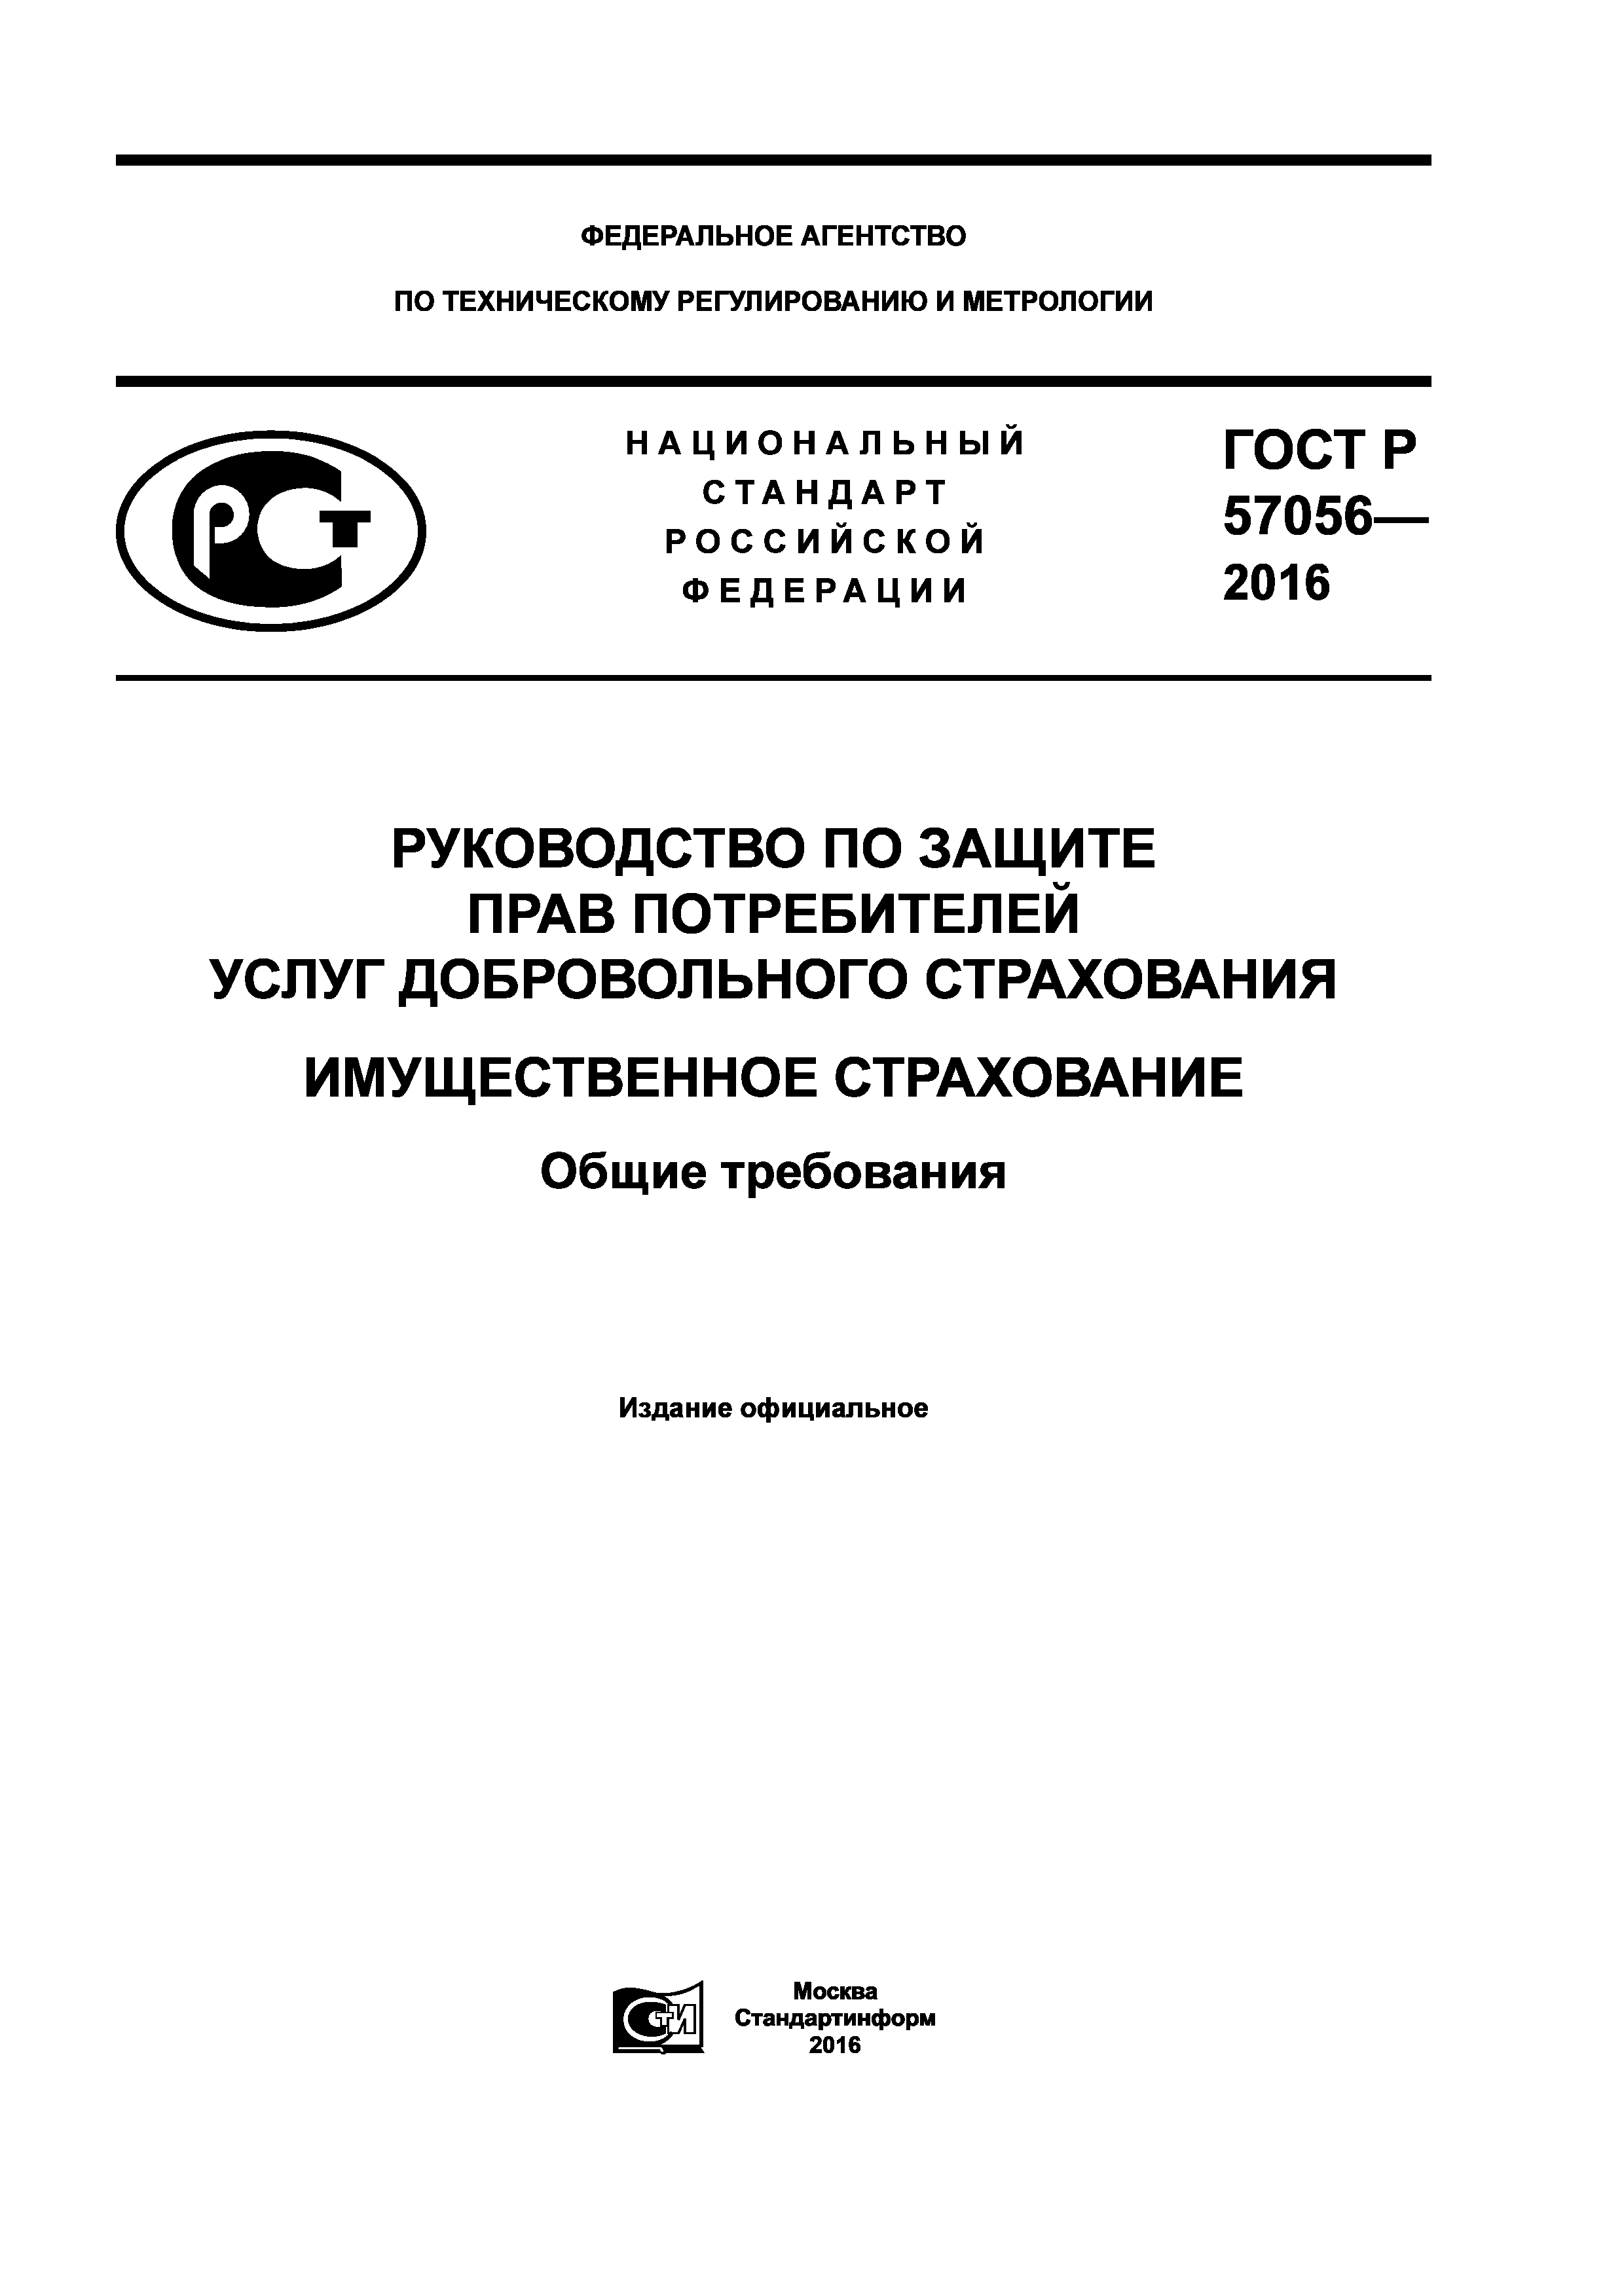 ГОСТ Р 57056-2016